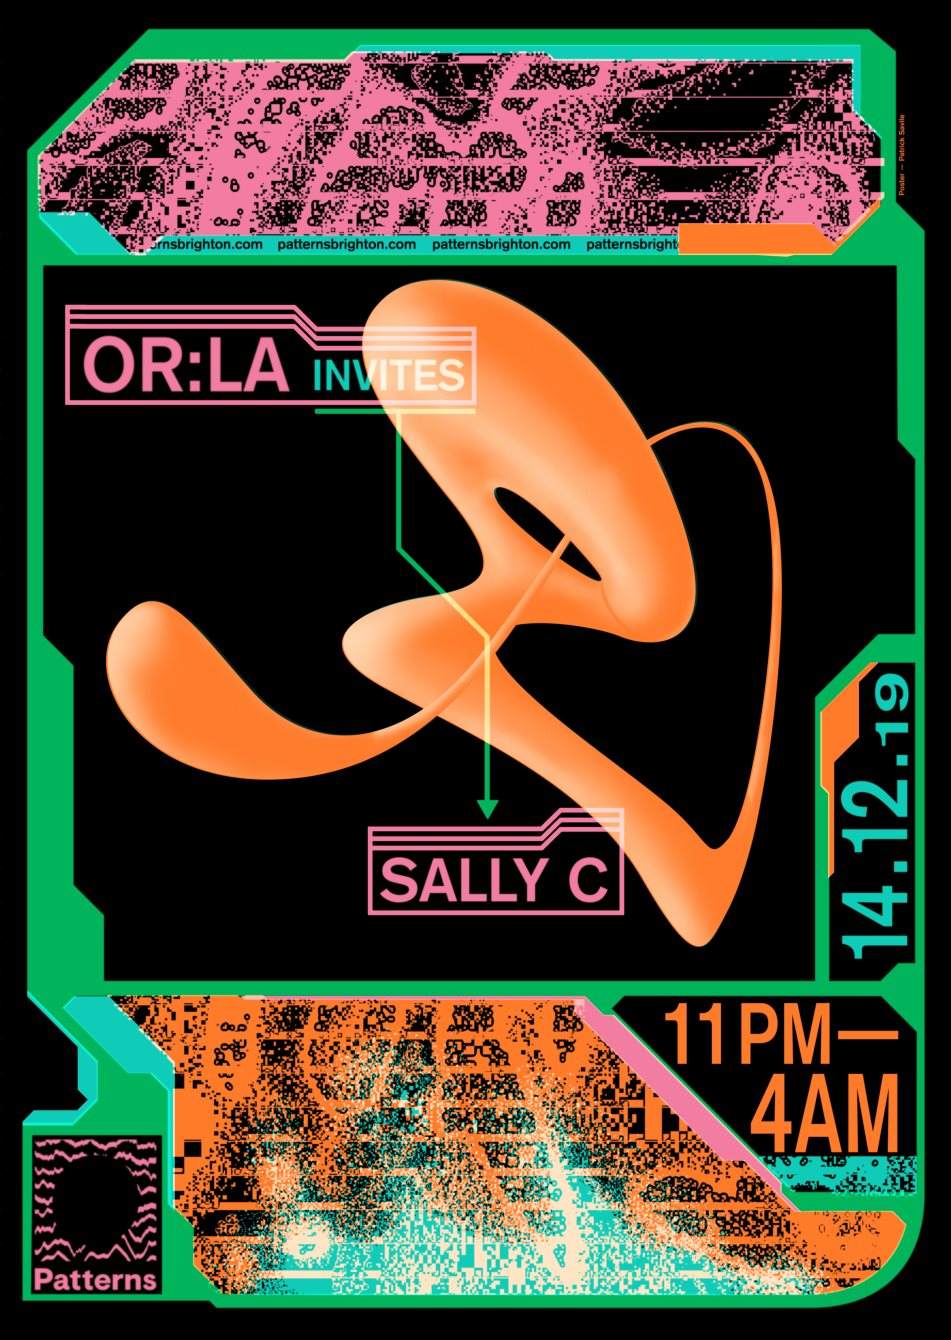 Or:la Invites: Sally C (Extended Set) - Página frontal